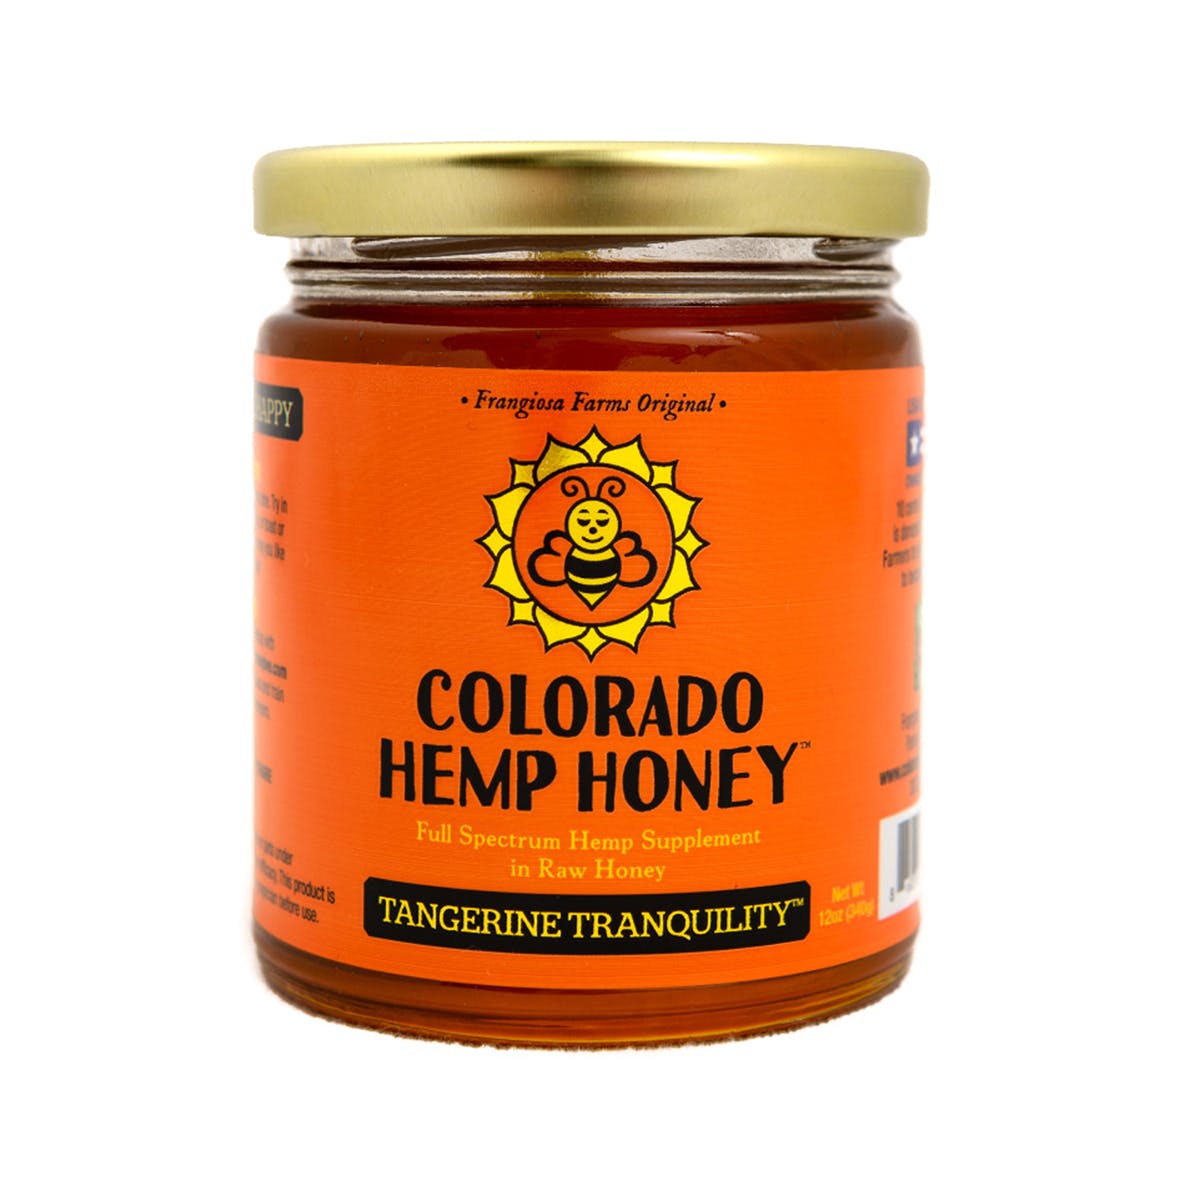 Colorado Hemp Honey Tangerine Tranquility